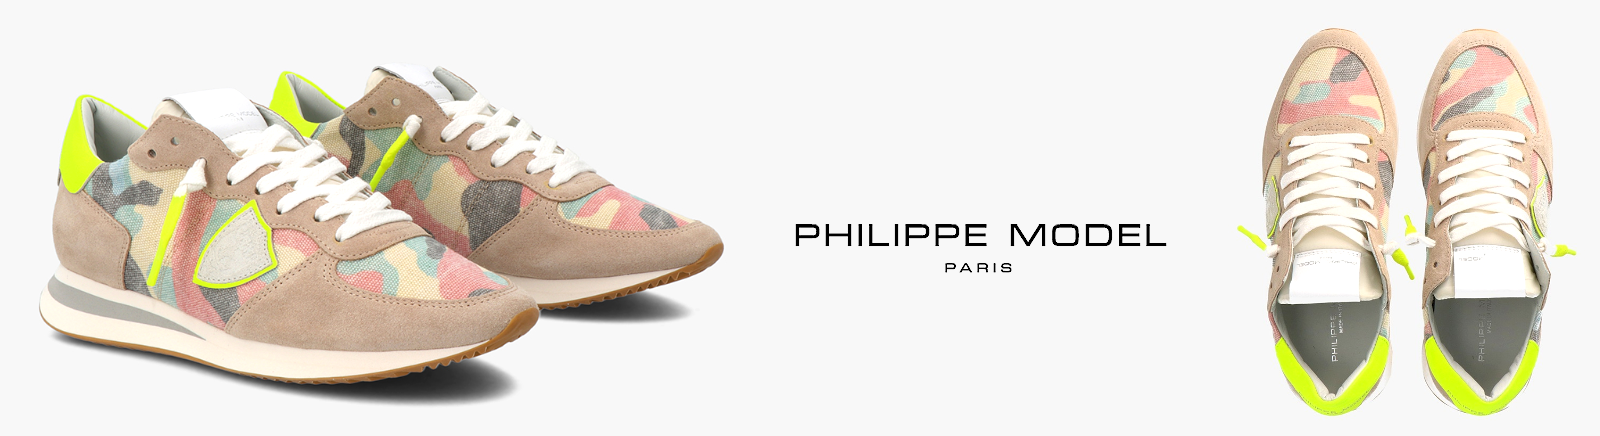 PHILIPPE MODEL Herren Schuhe kaufen im GISY Online Shop